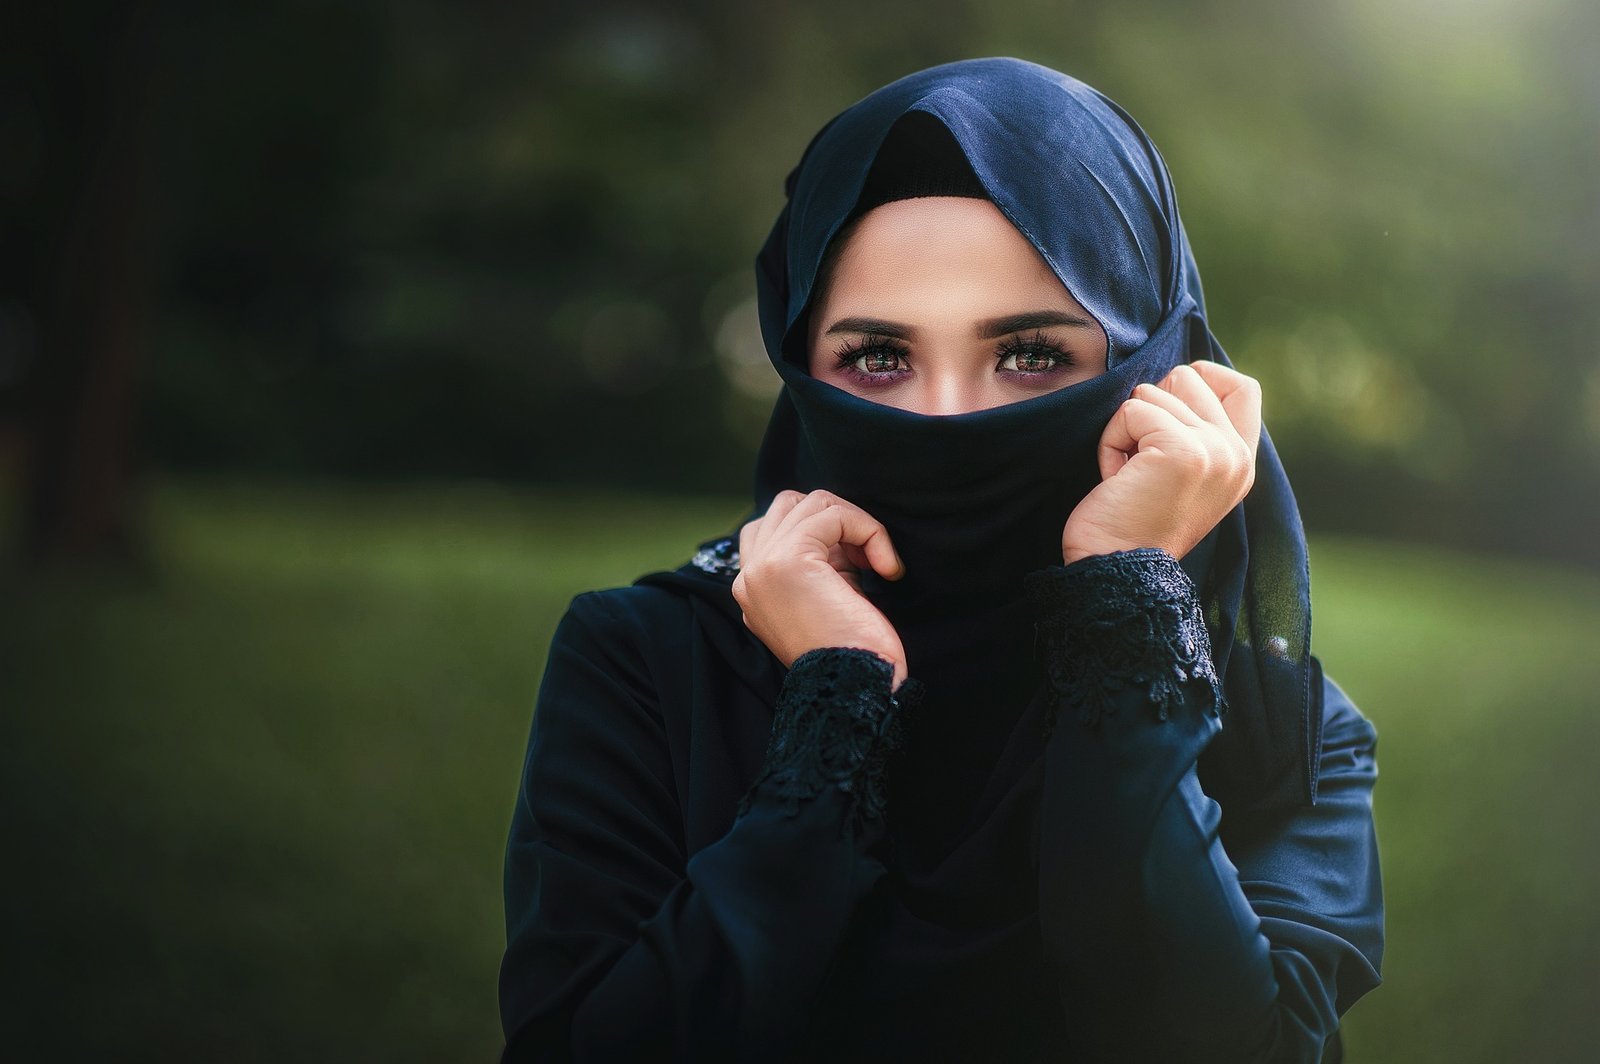 Lady wearing the black abaya dress